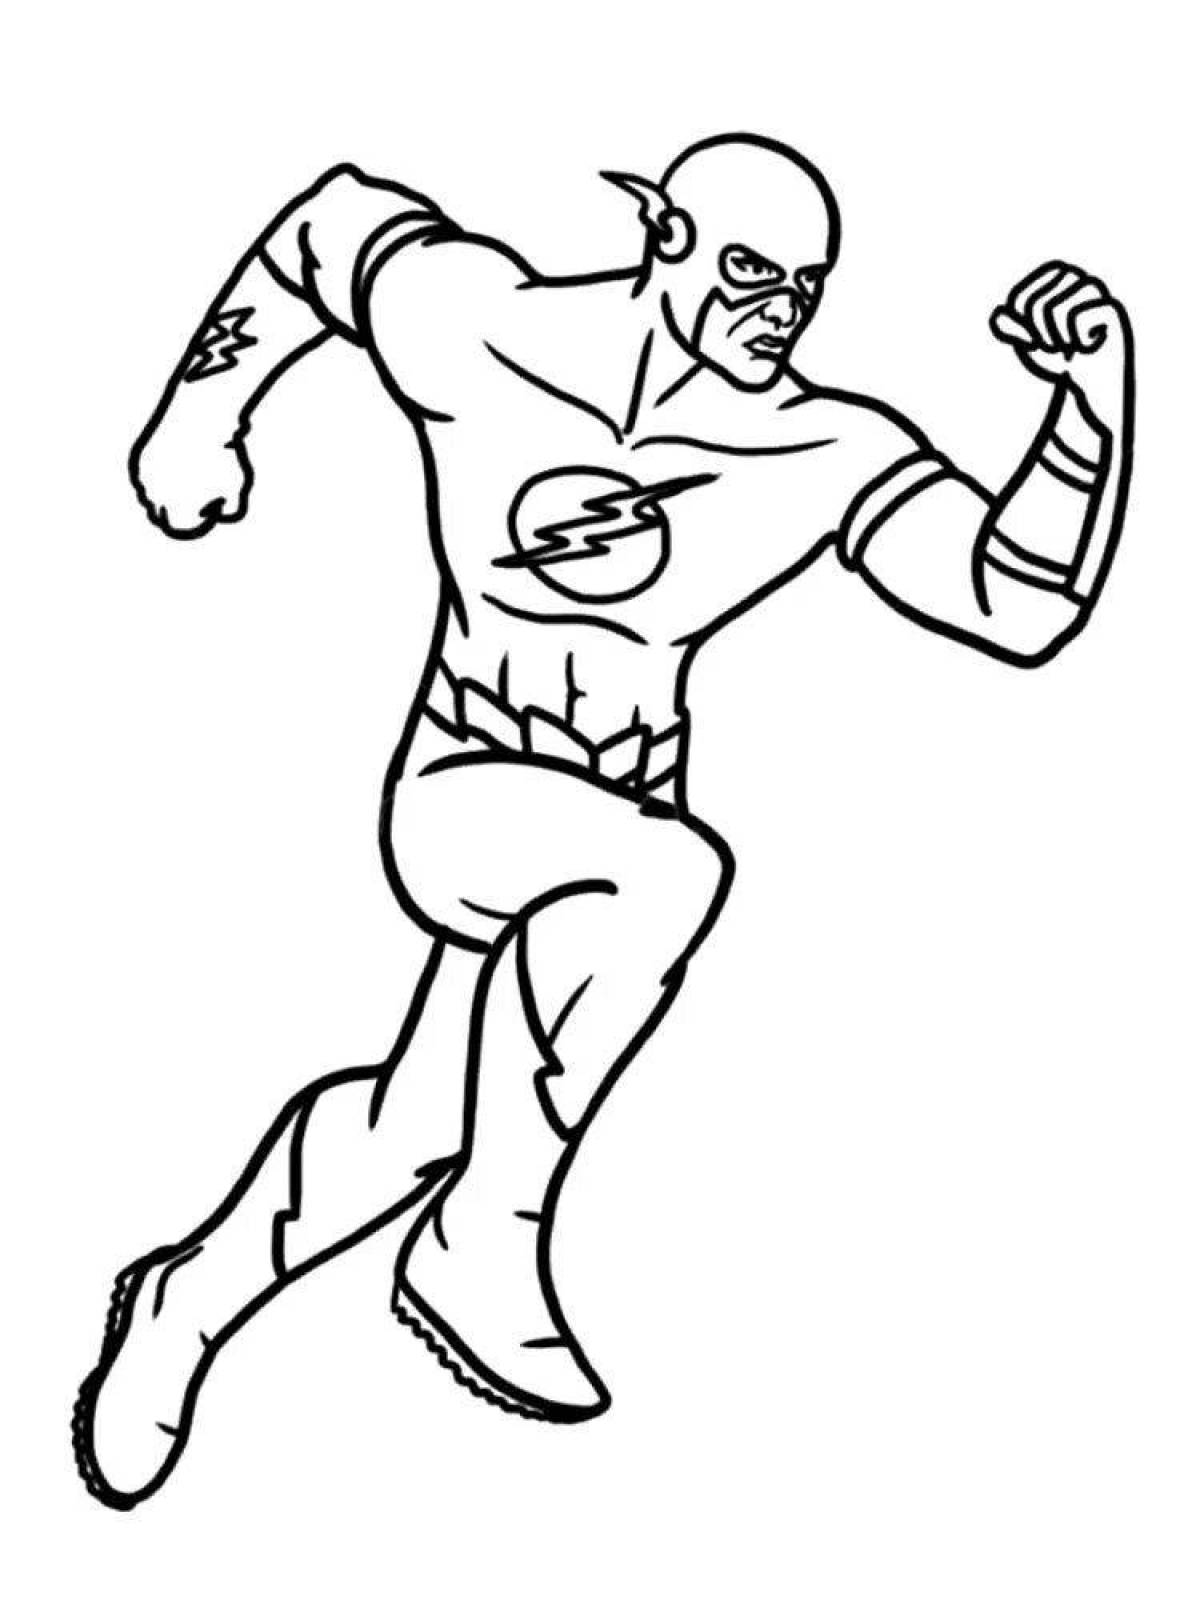 Powerful flash superhero coloring book